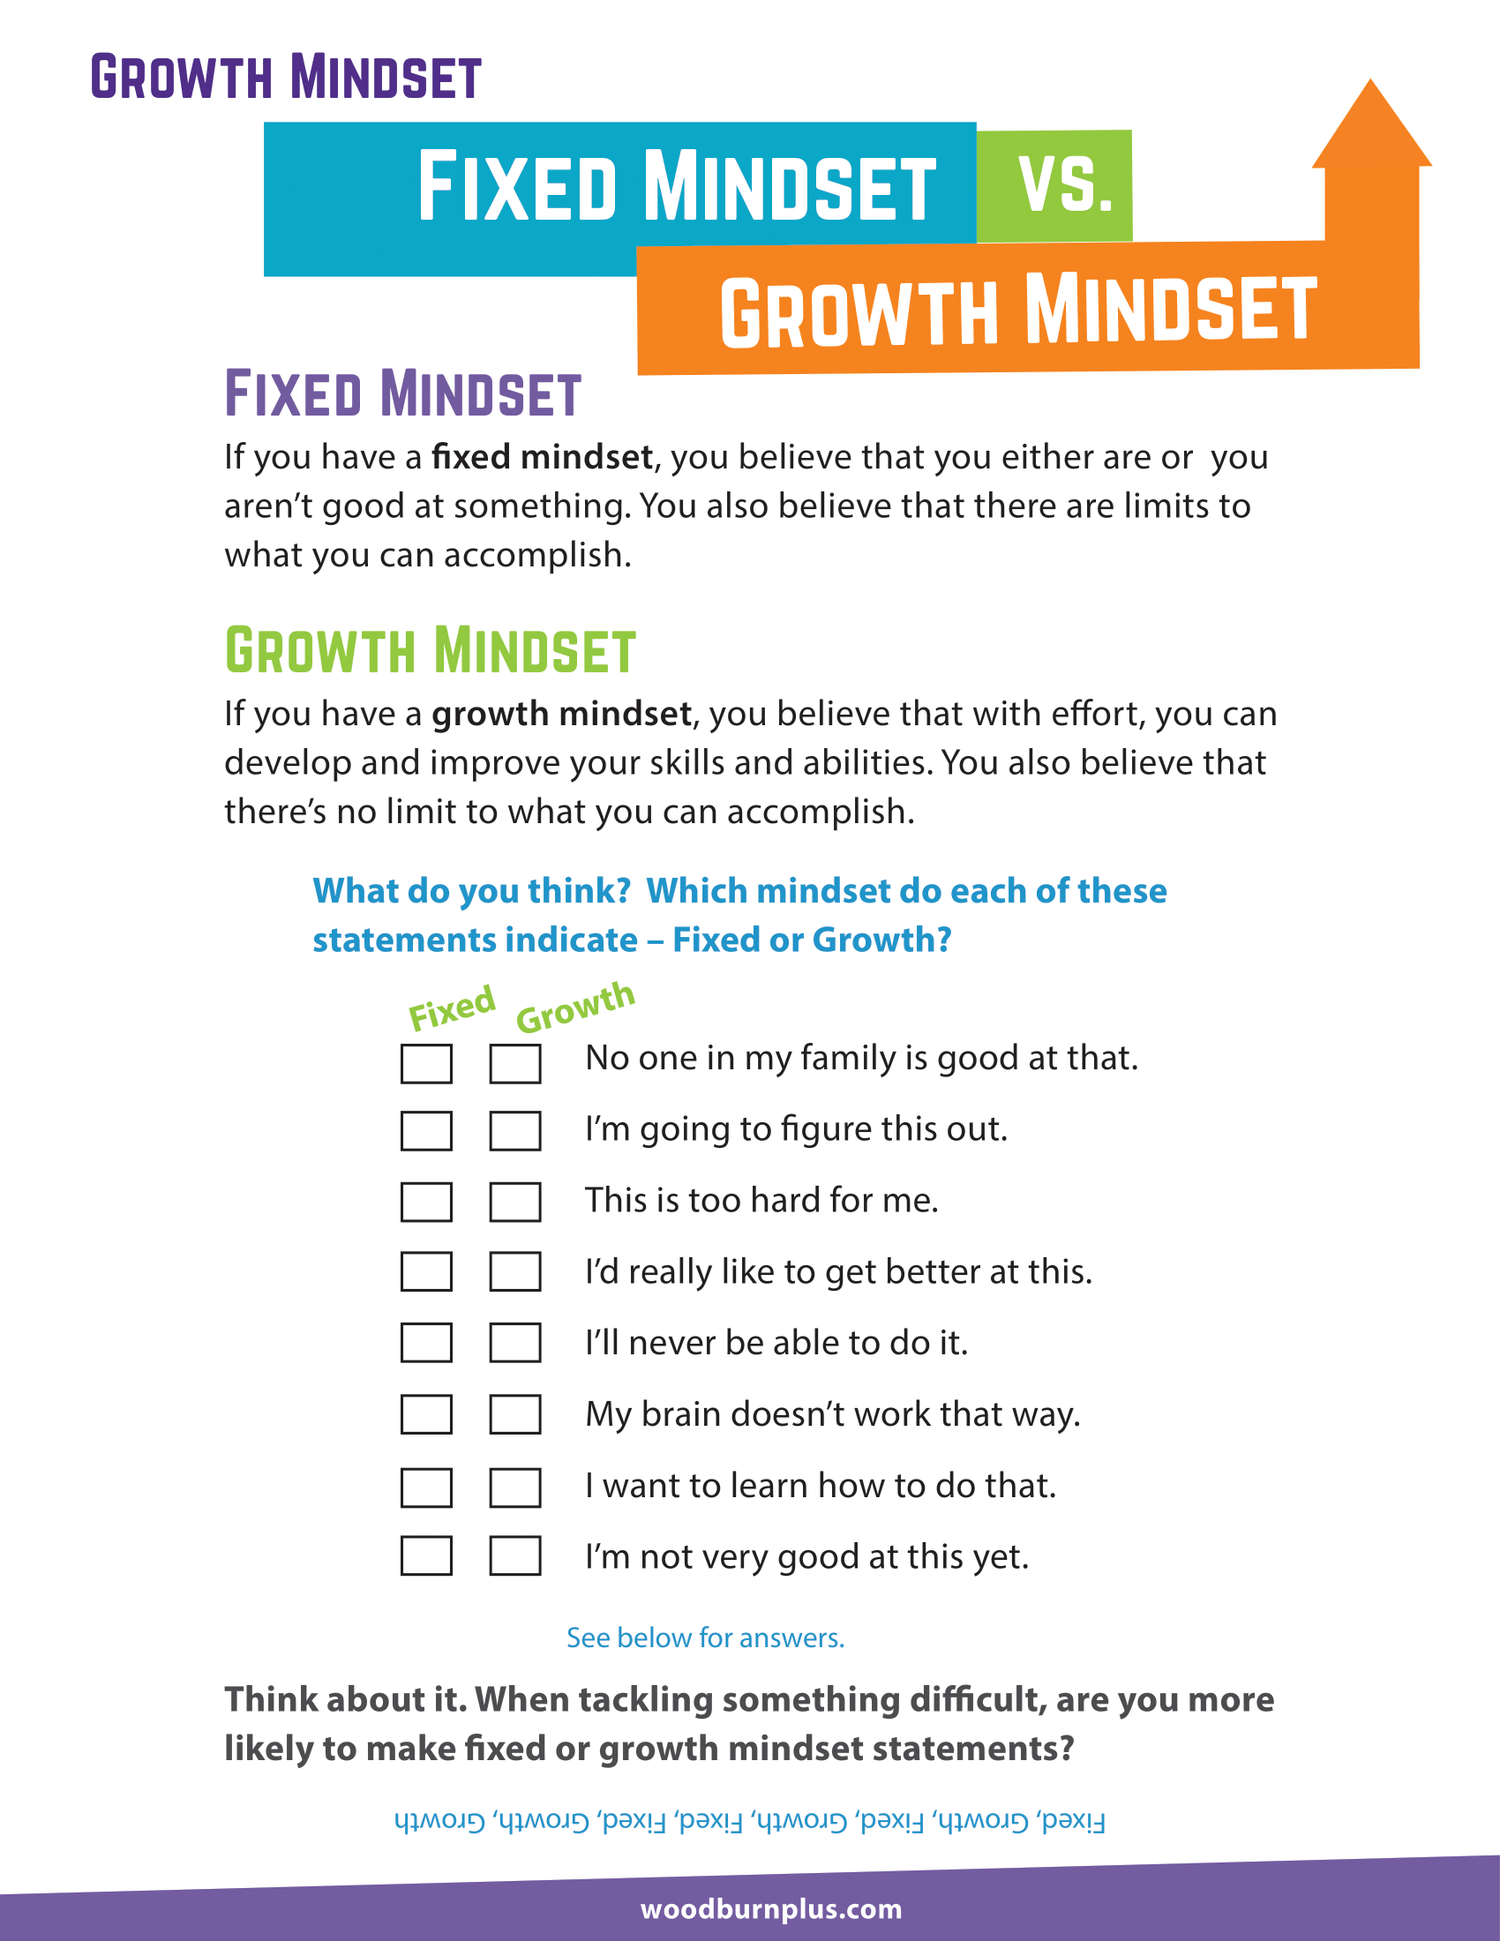 Fixed Mindset vs. Growth Mindset